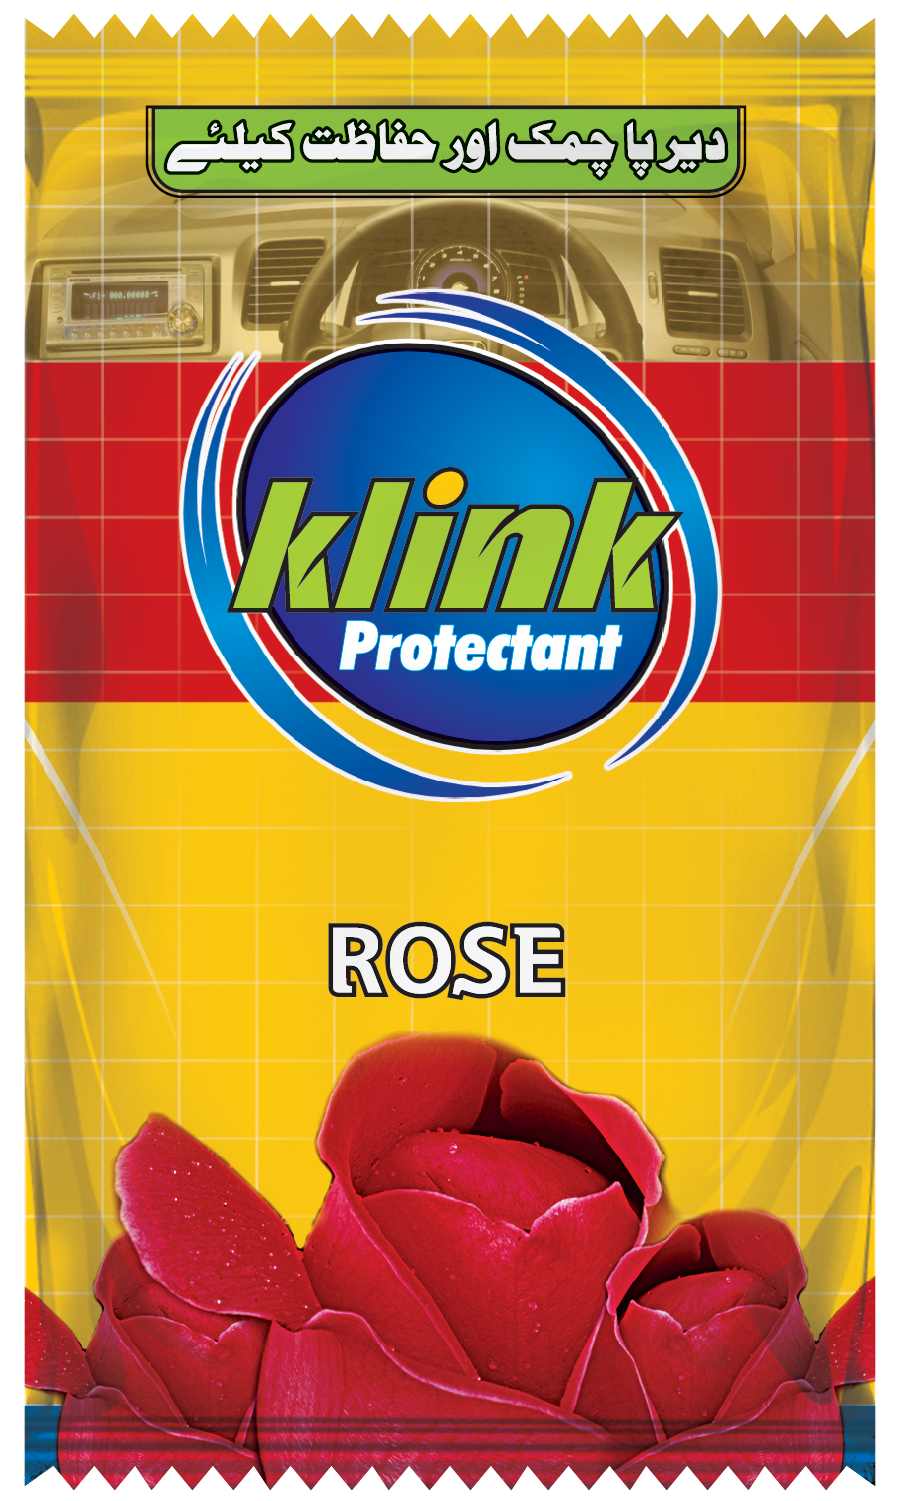 Klink Protectant Sachet (Rose Fragrance)